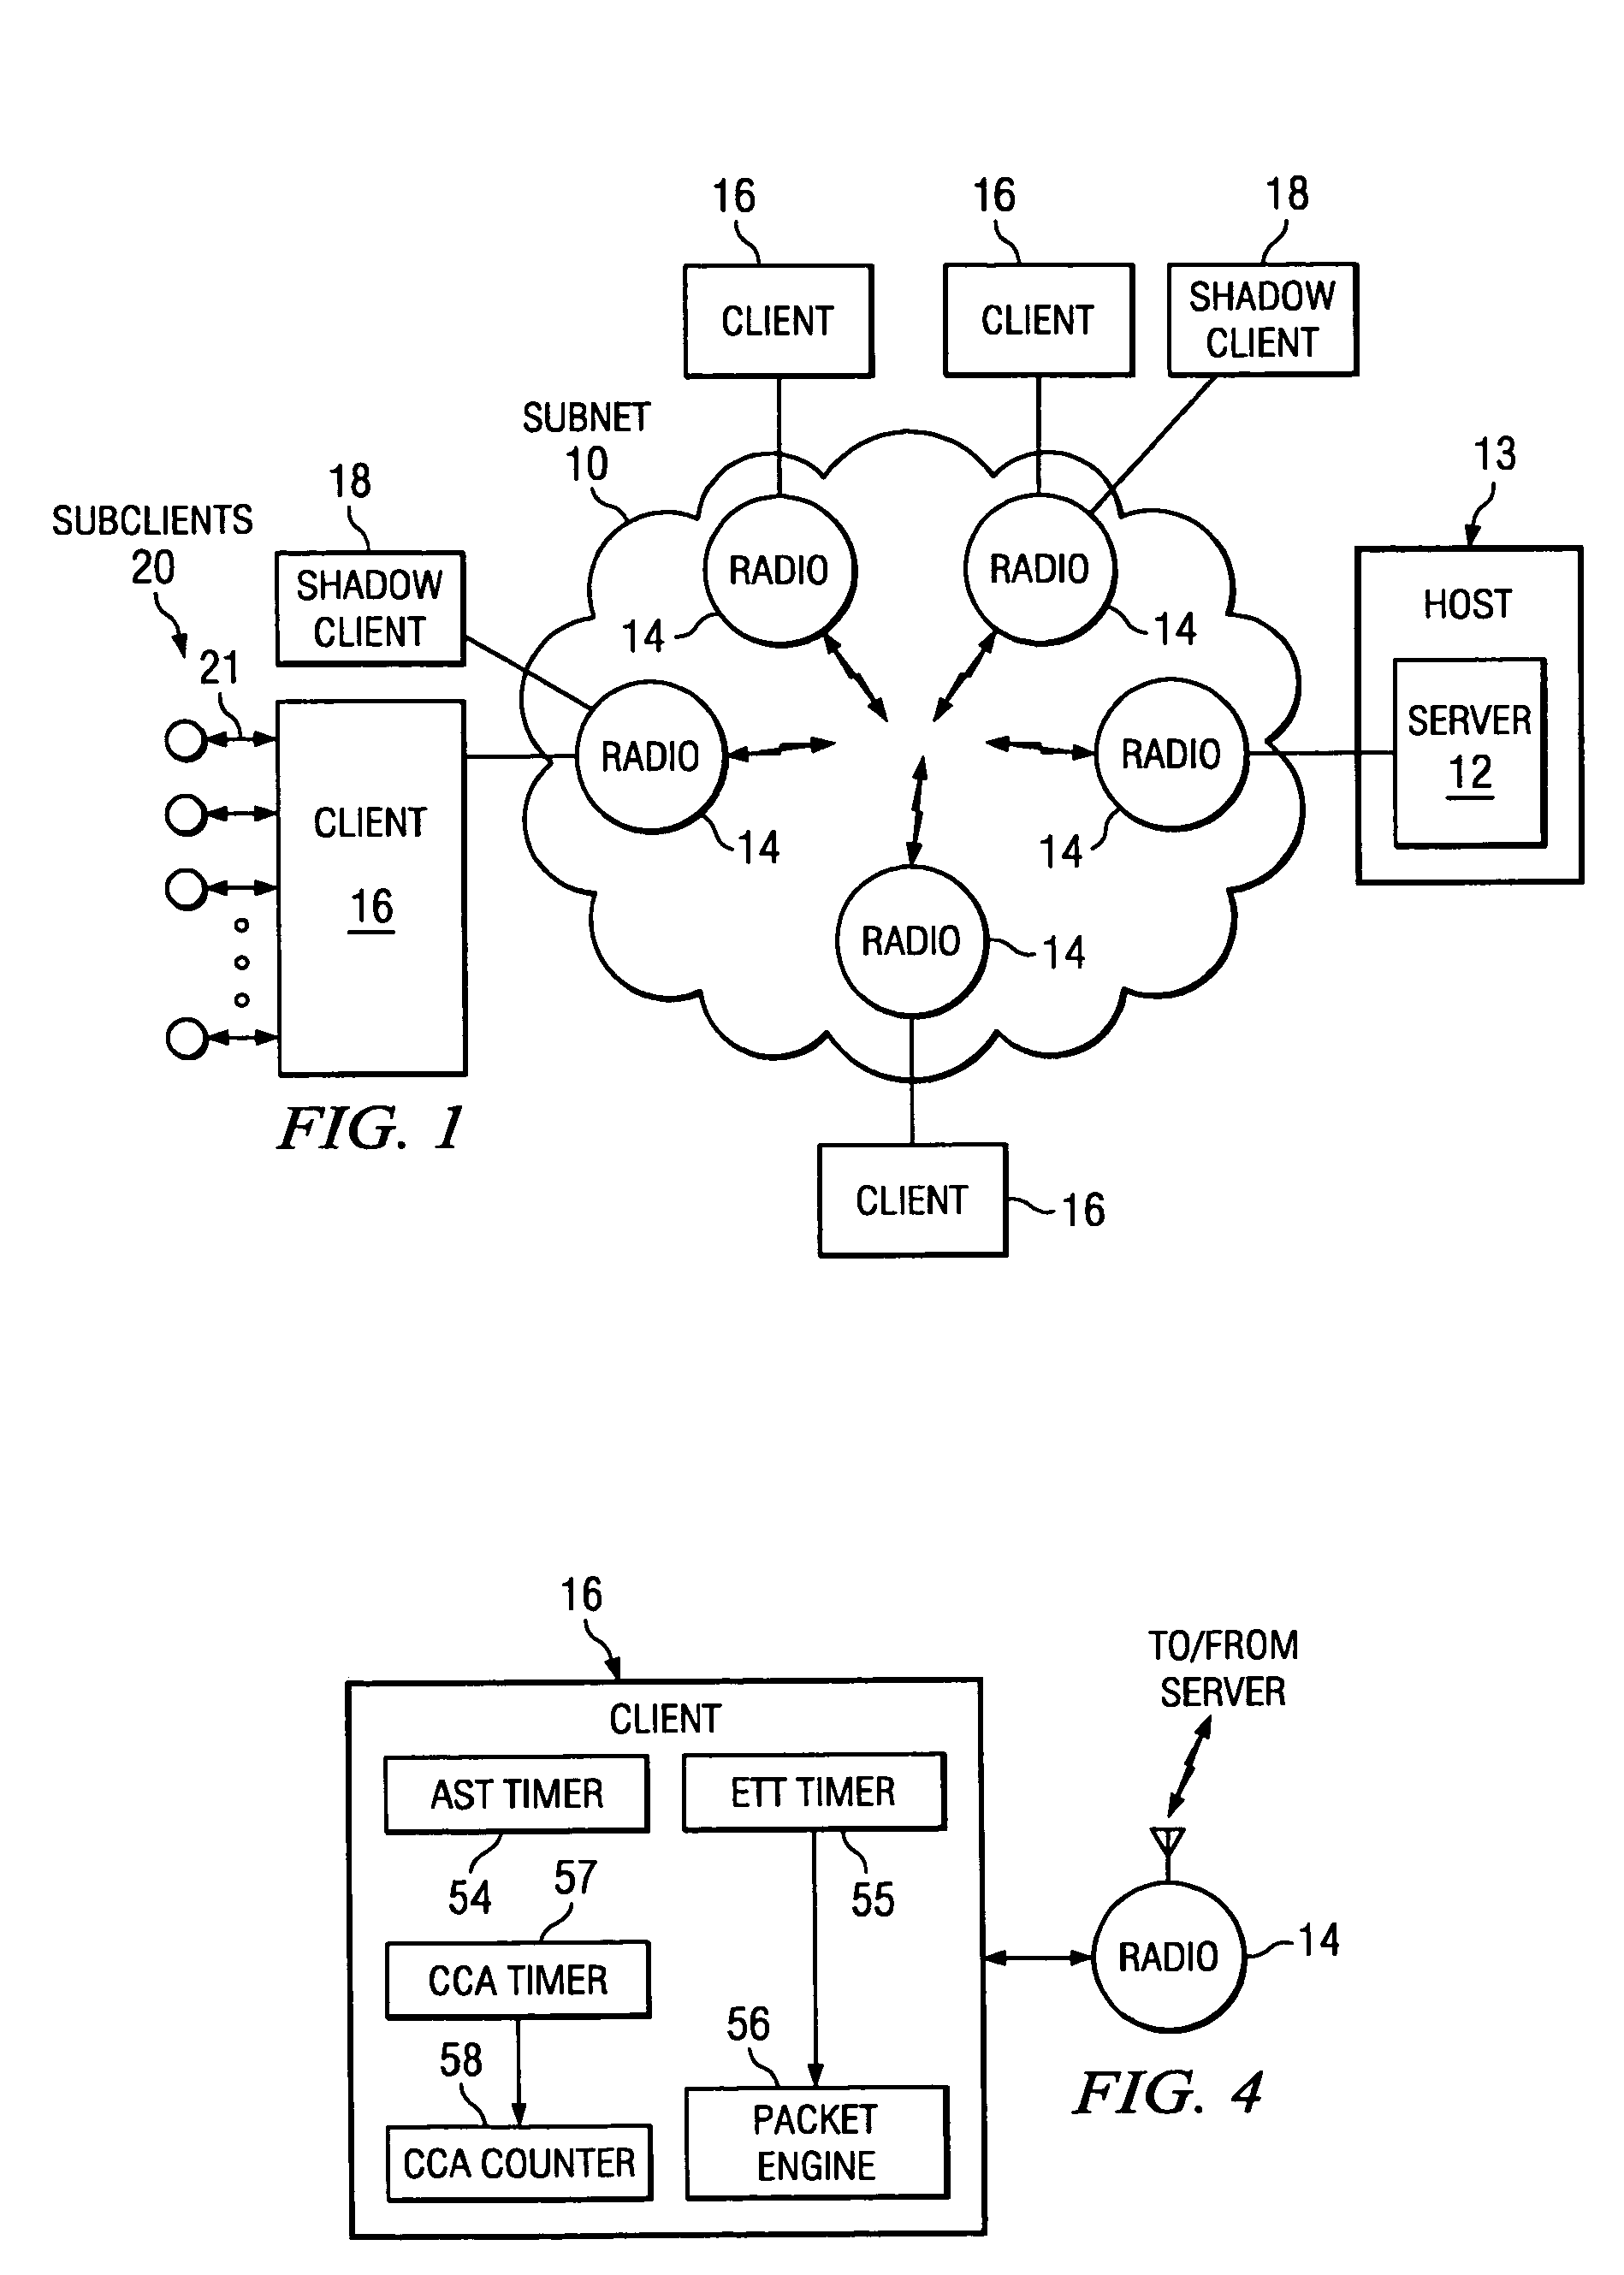 Network slot synchronization scheme for a computer network communication channel